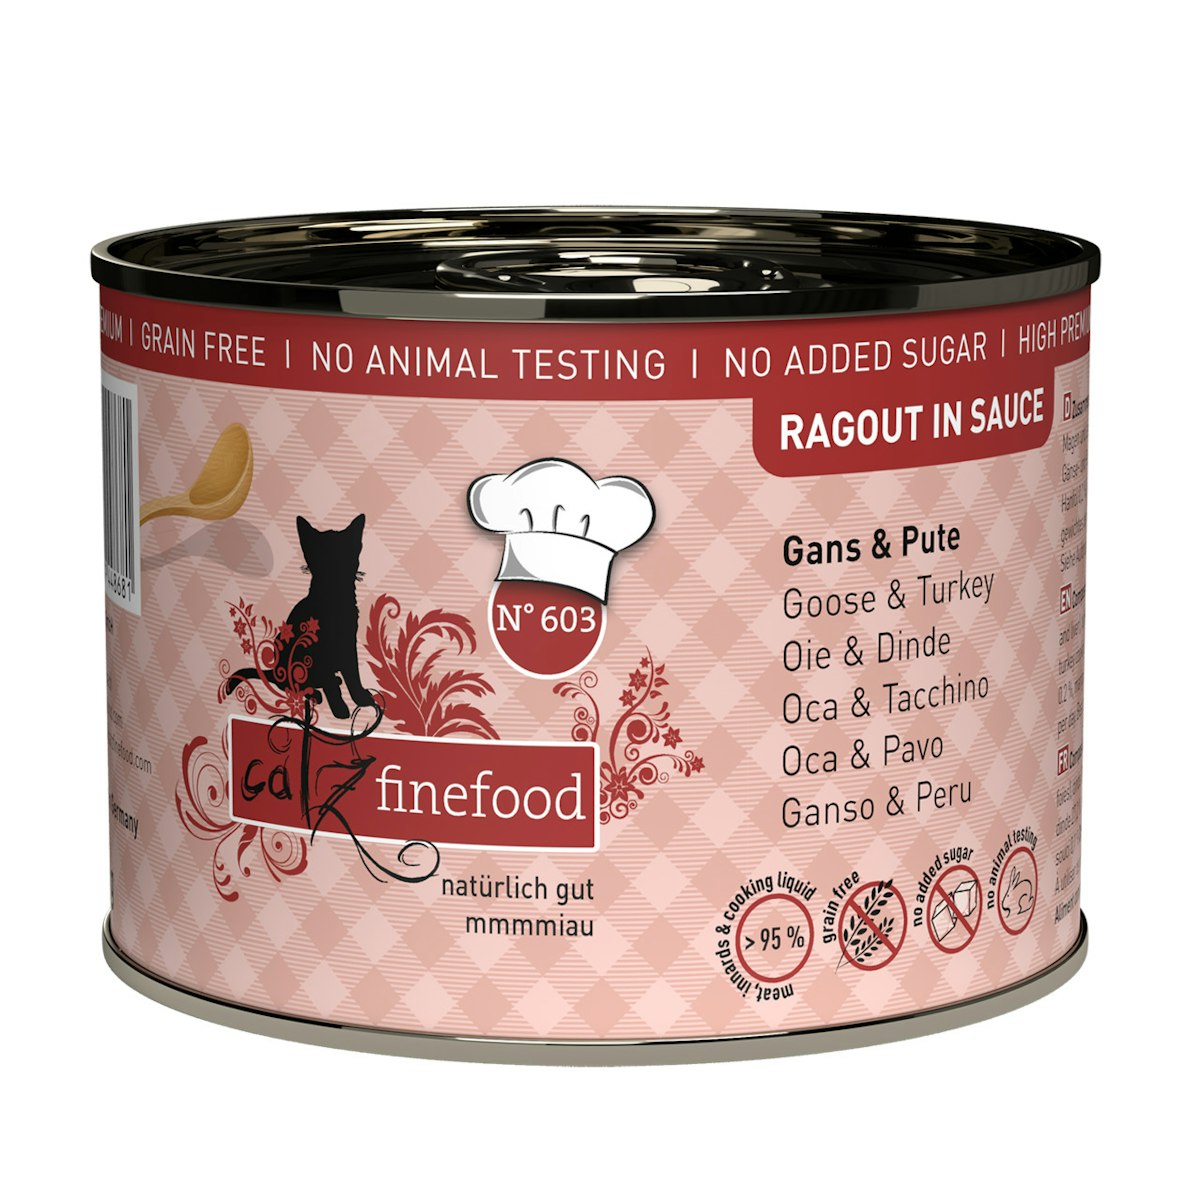 Cats finefood Ragout 190 Gramm Katzennassfutter von Catz Finefood